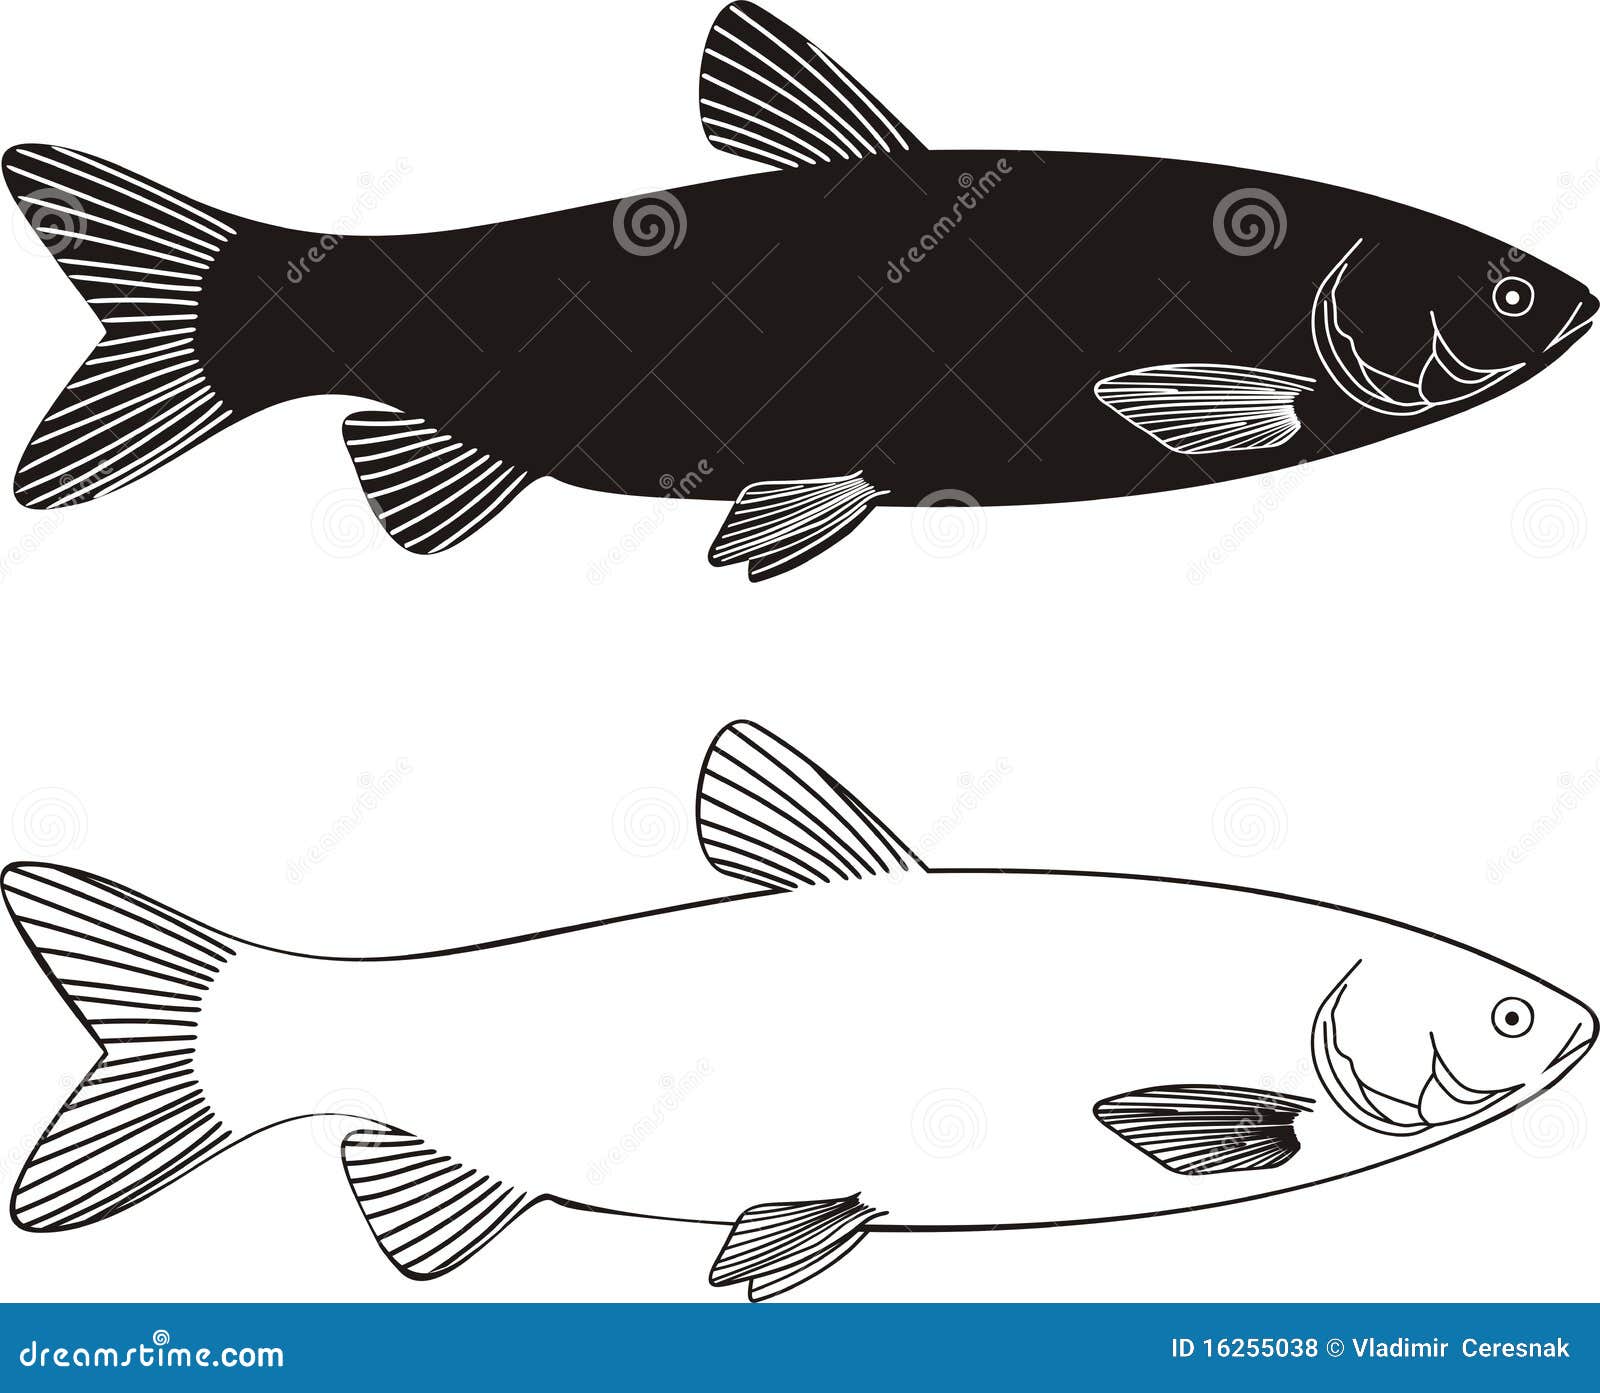 carp fish clip art free - photo #25